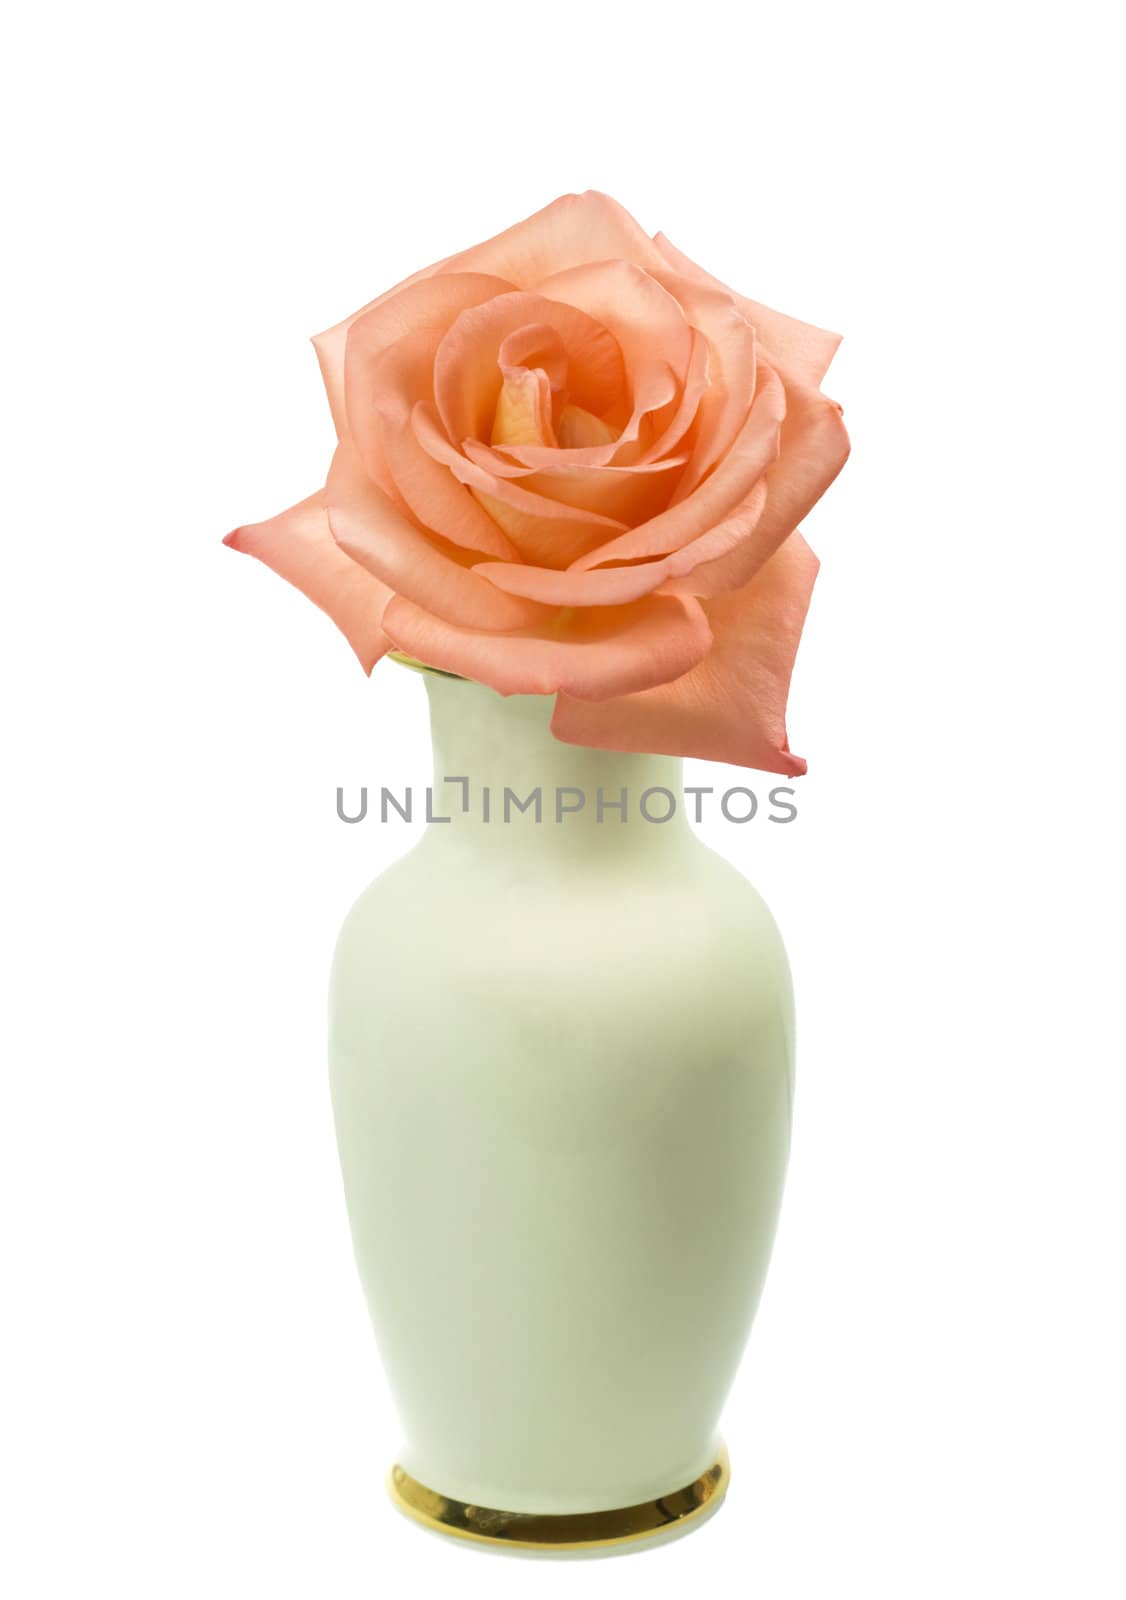 rose flower bloom in a vase by sherj